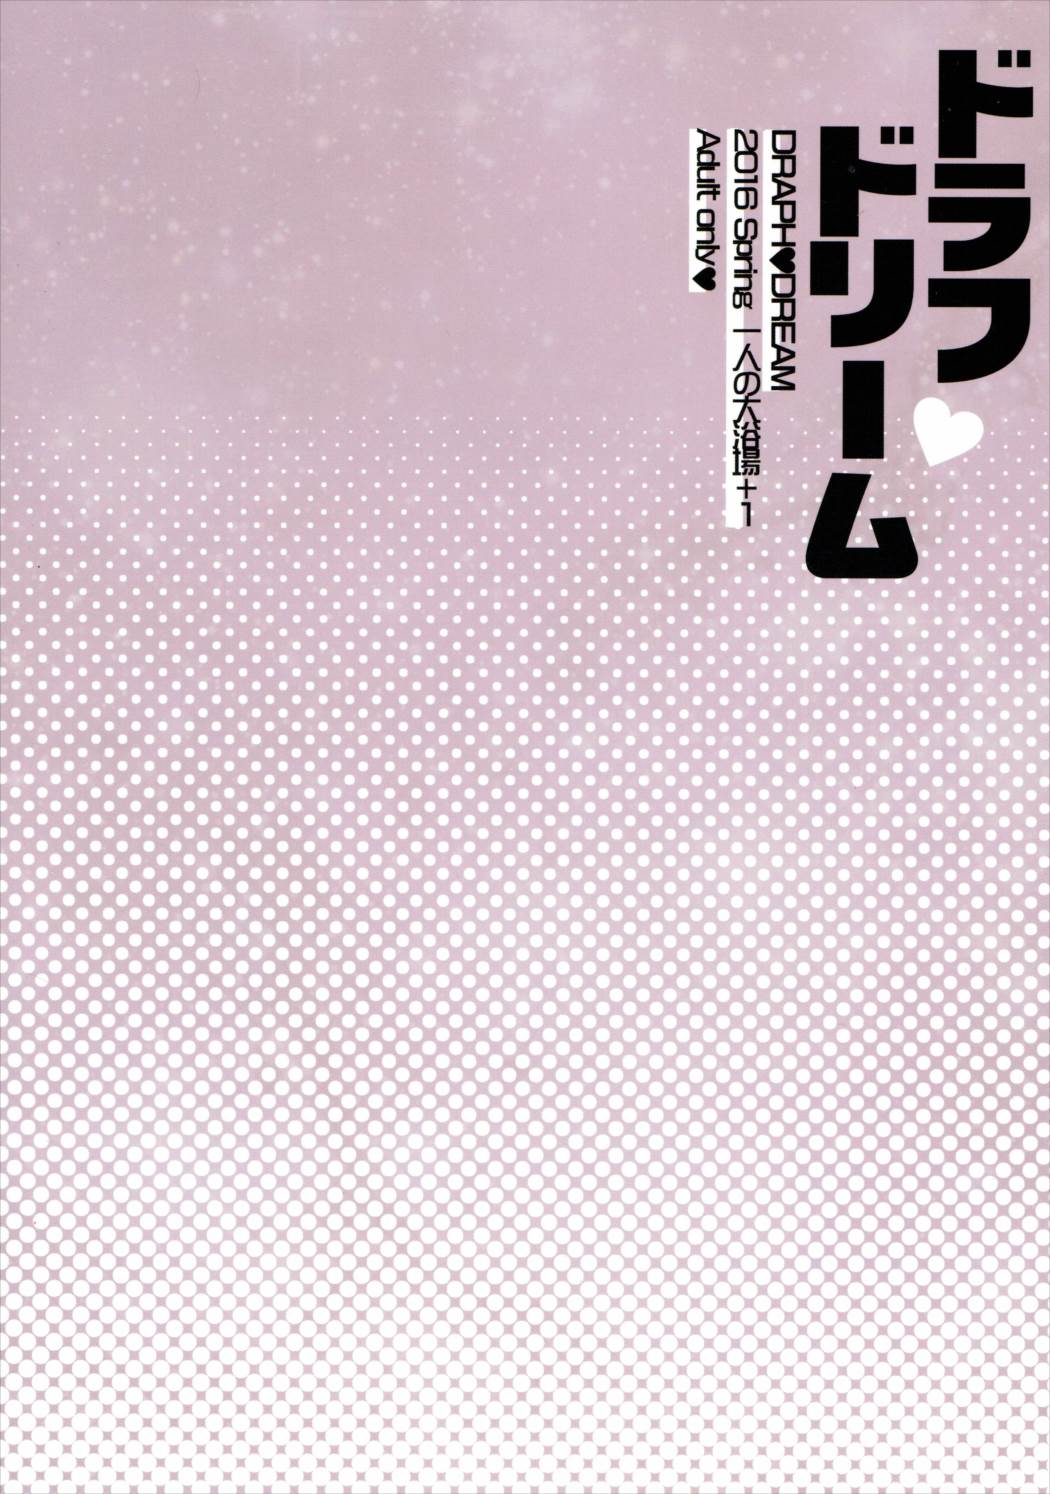 (COMIC1☆10) [Hitori no Daiyokujou (bowcan)] Draph Dream (Granblue Fantasy) (COMIC1☆10) [一人の大浴場 (ぼーかん)] ドラフドリーム (グランブルーファンタジー)